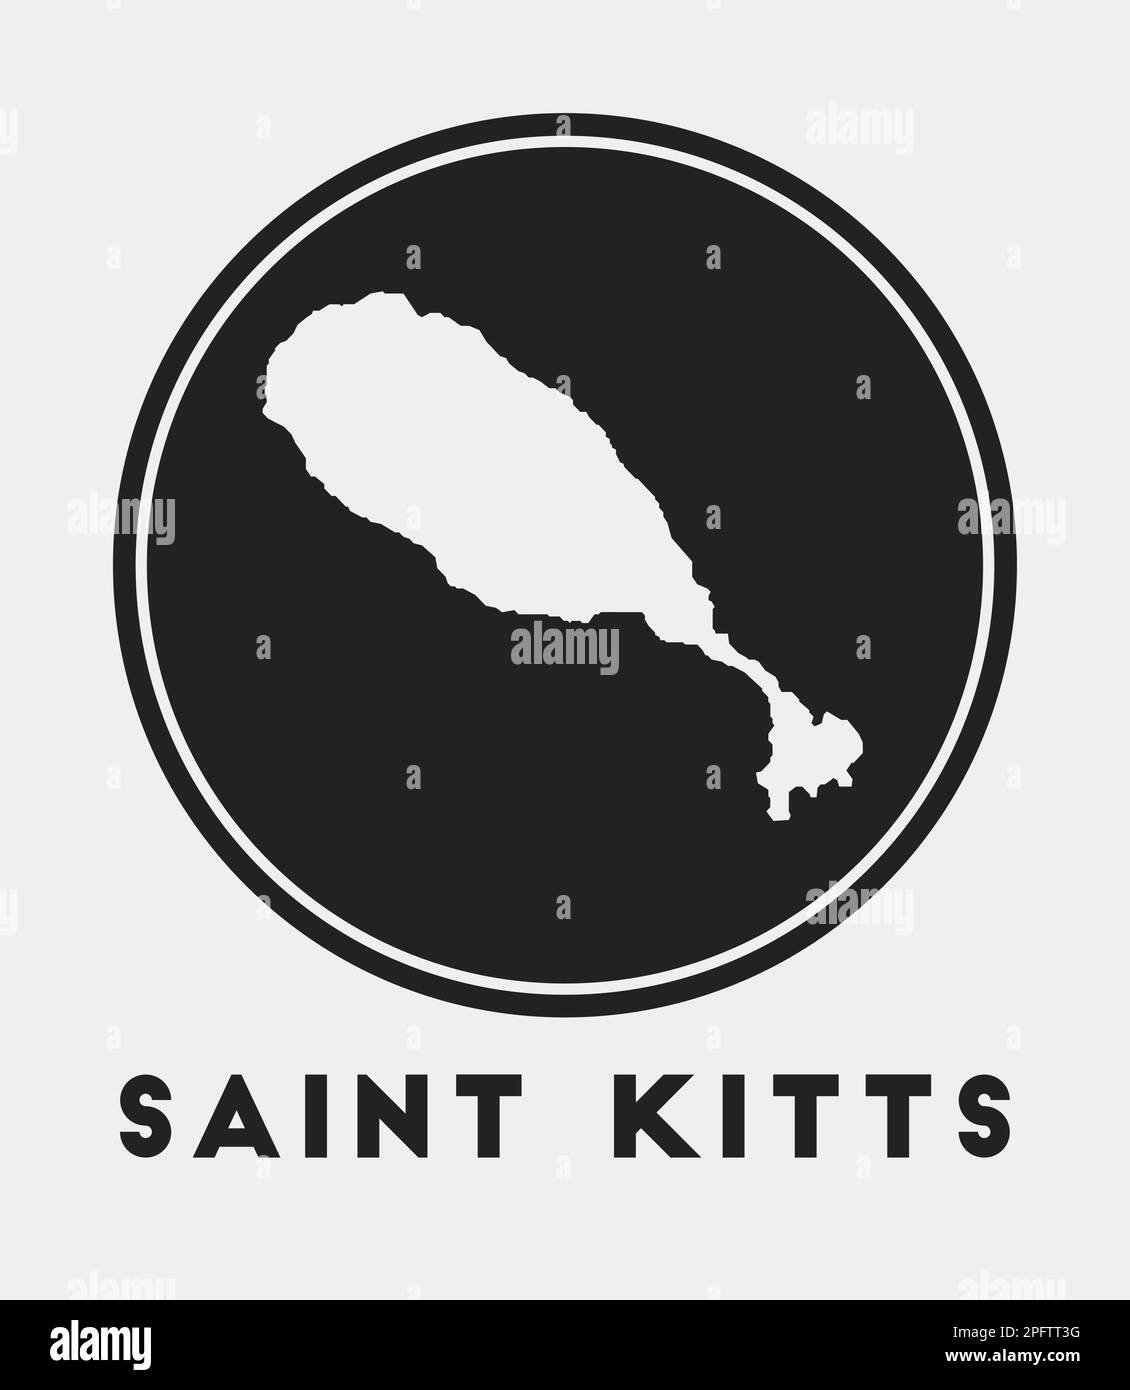 Saint Kitts icon. Round logo with island map and title. Stylish Saint ...